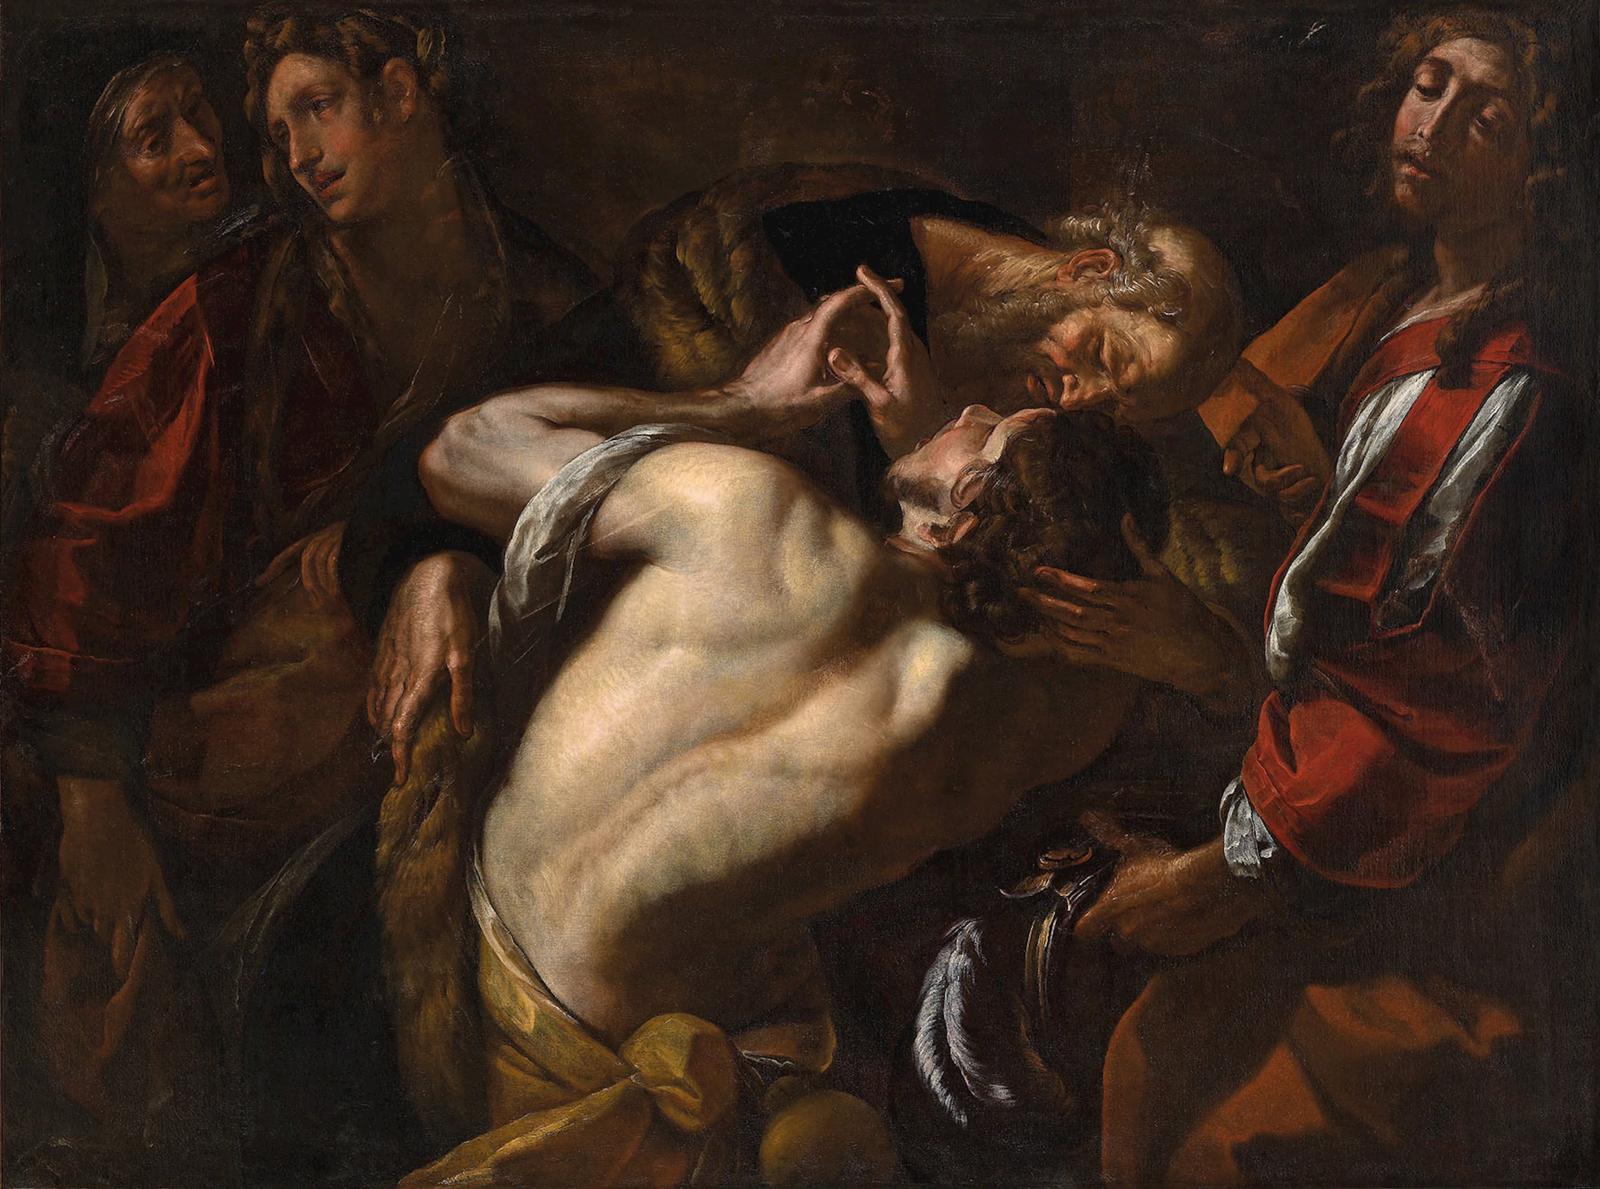 Giulio Cesare Procaccini (1574-1625), "Le Retour du Fils prodigue", oil on canvas, 141.5 x 190.5 cm.